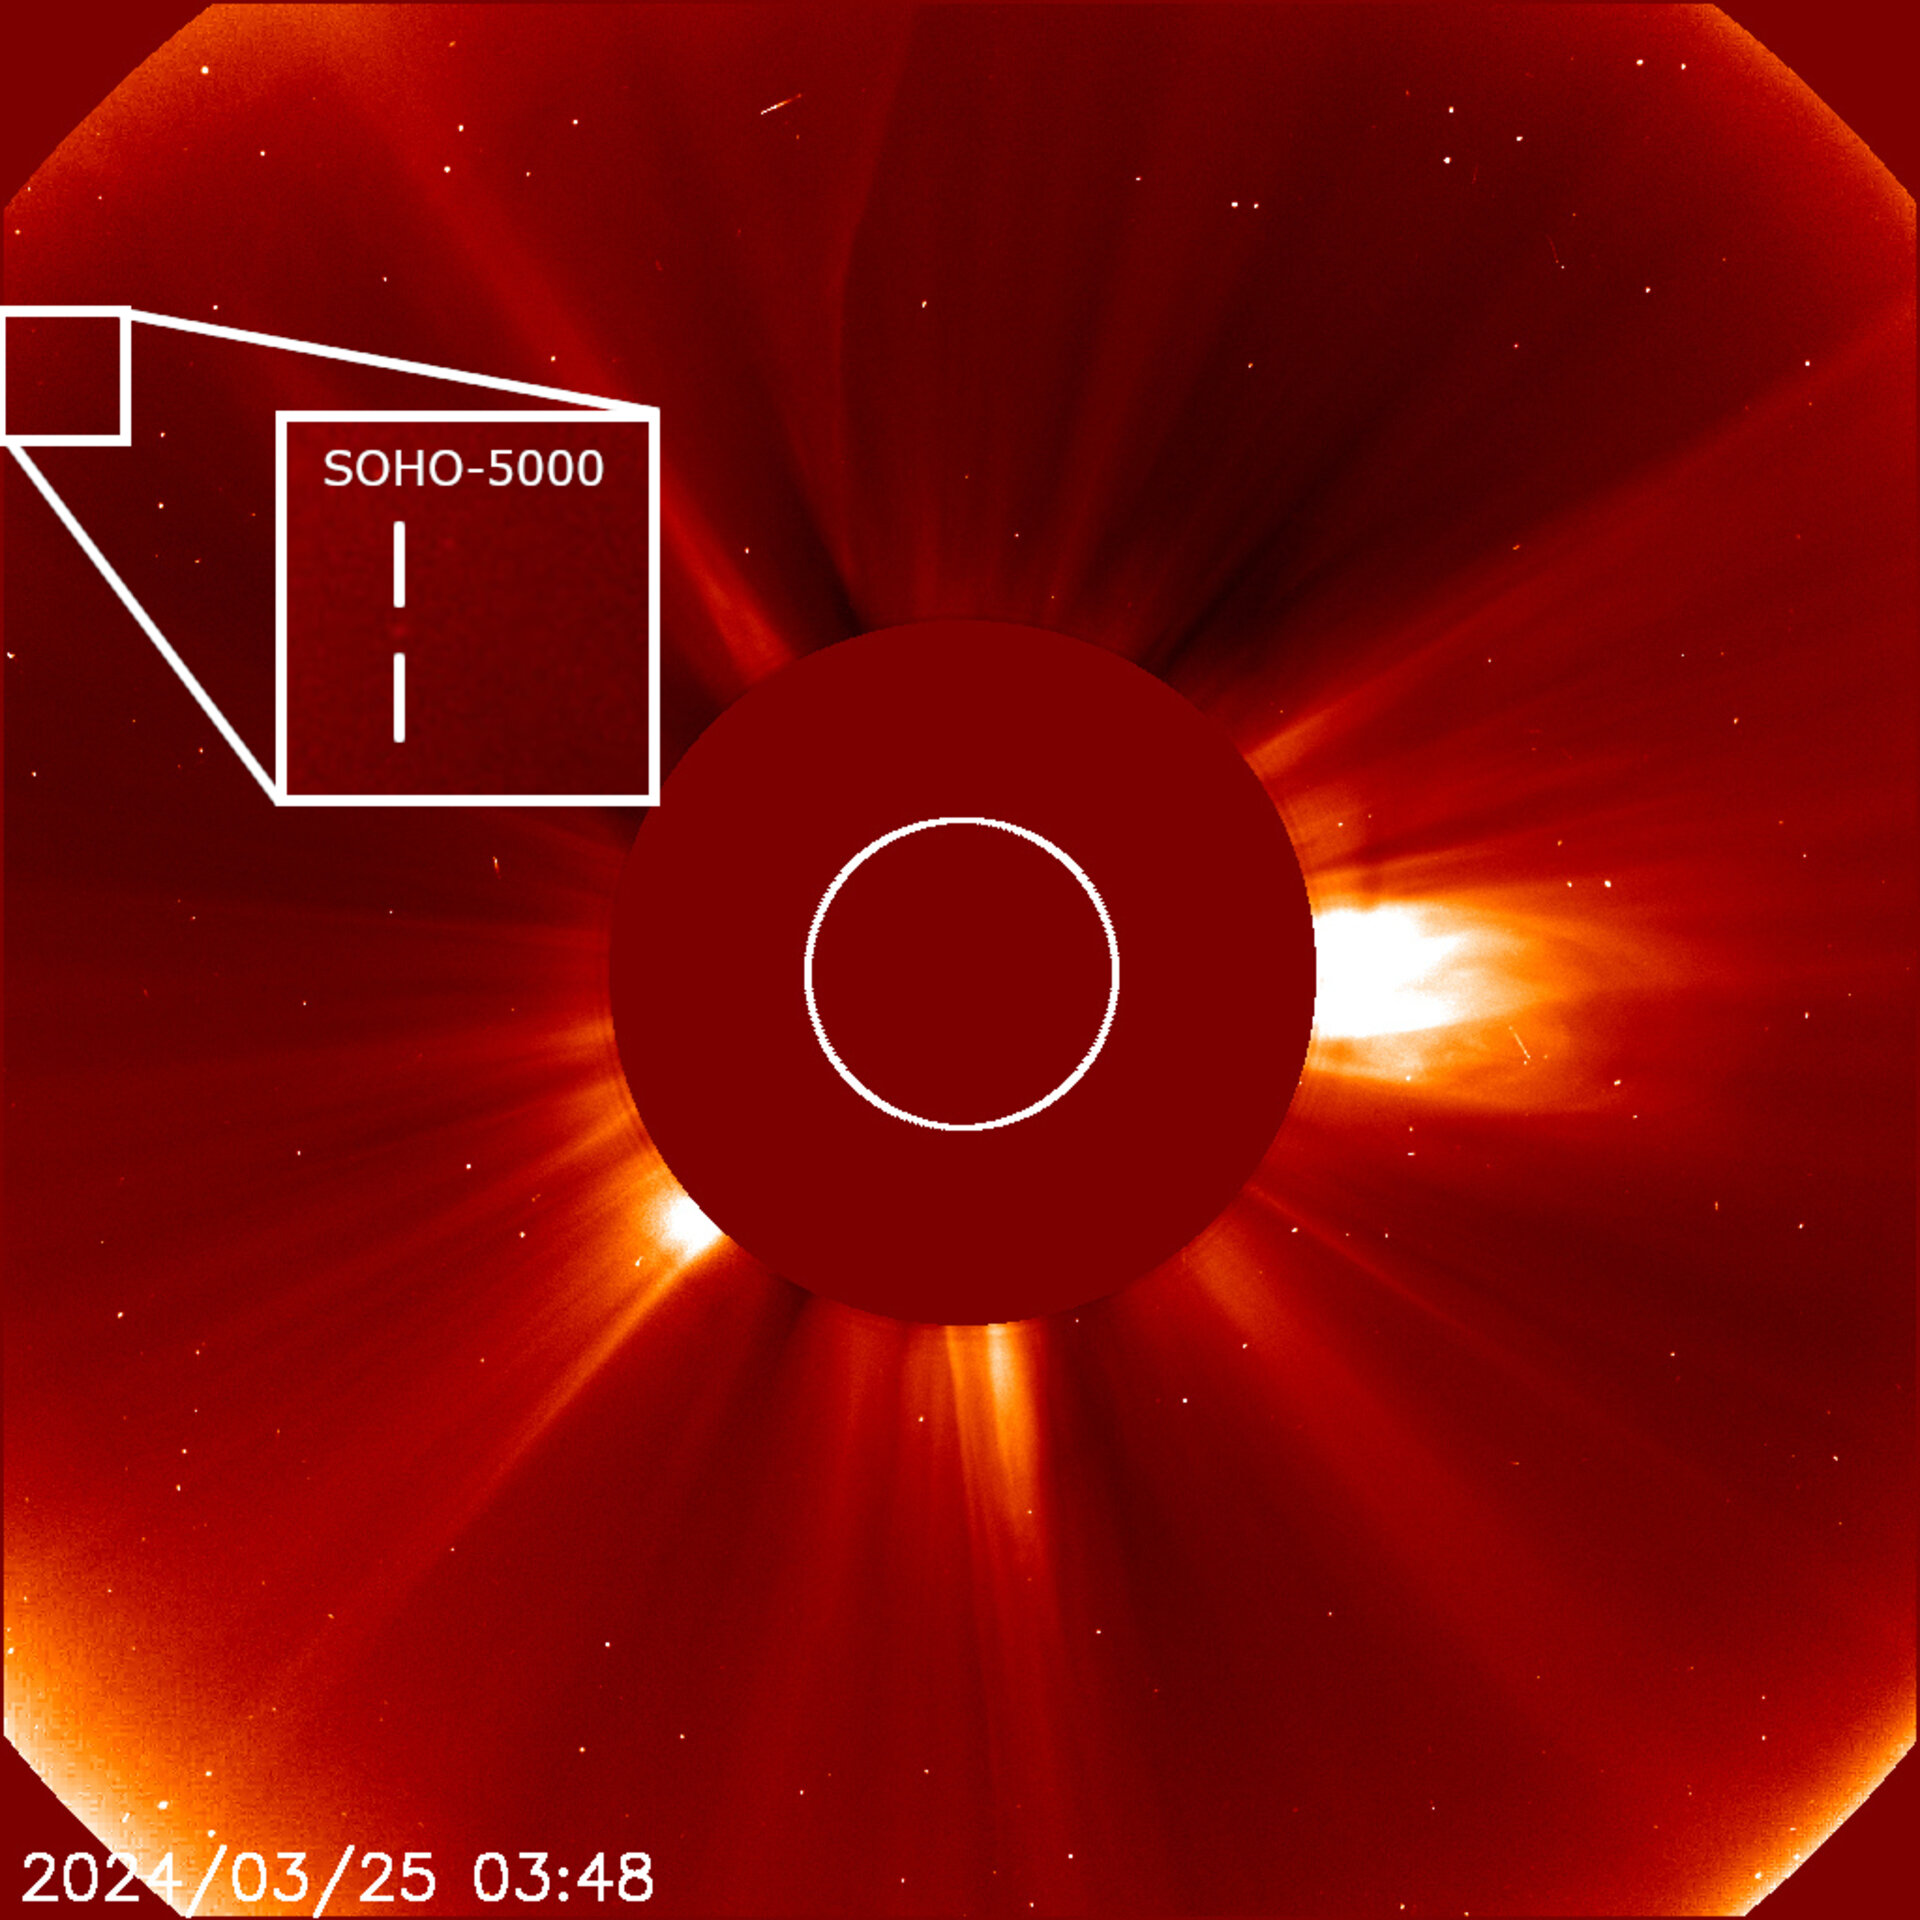 SOHO discovers a five-thousandth near-solar comet